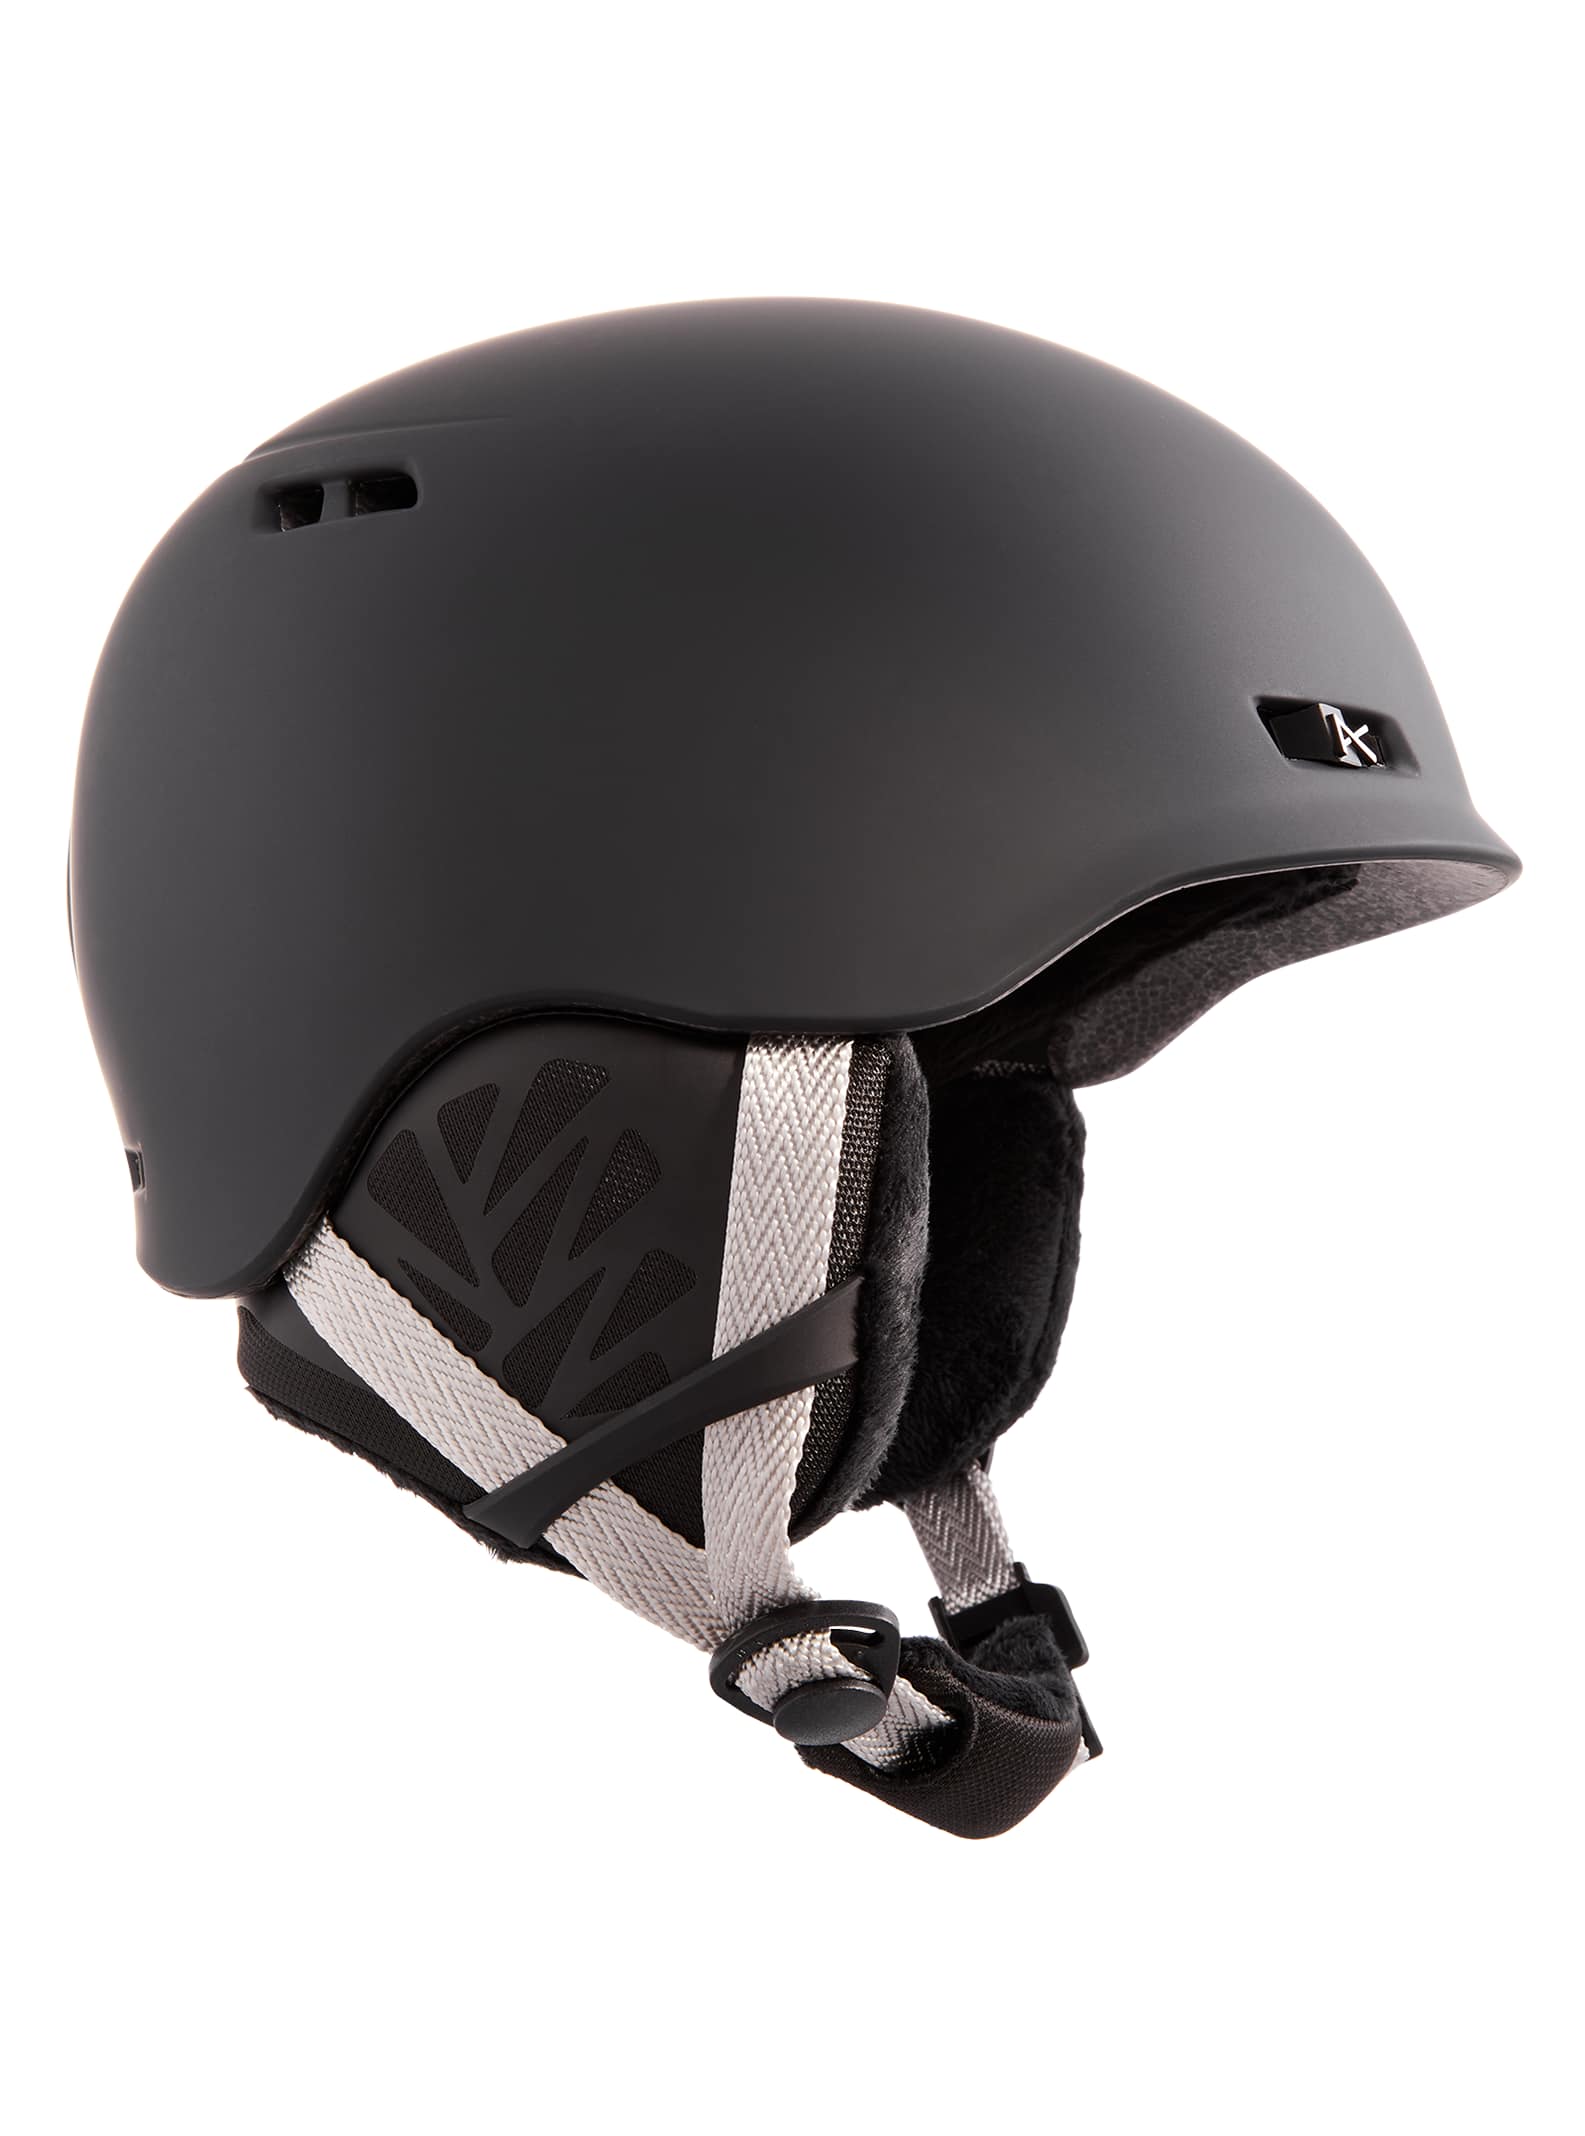 Women's Helmets | Ski & Snowboard Helmets for Women | Anon Optics US